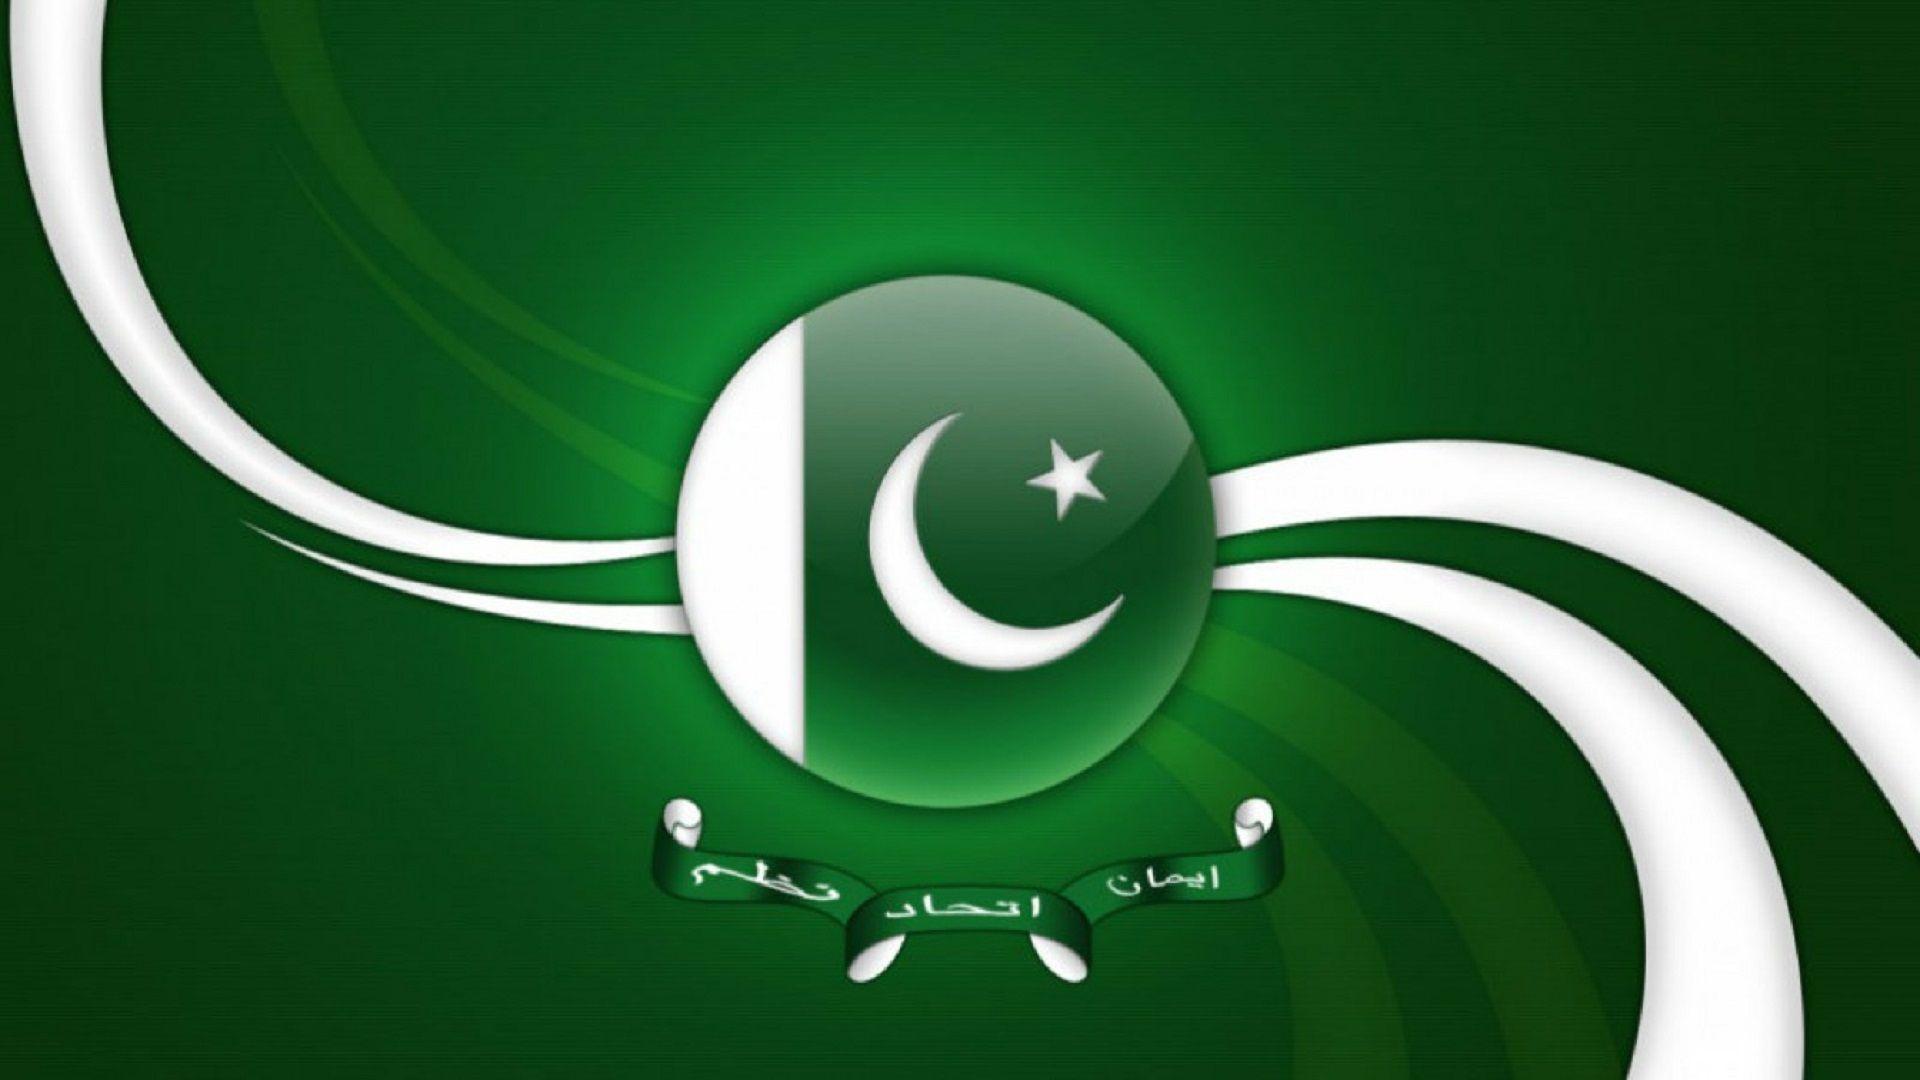 Background Flag HD Image Pics Aug Tok With Of Pakistan Image 2017